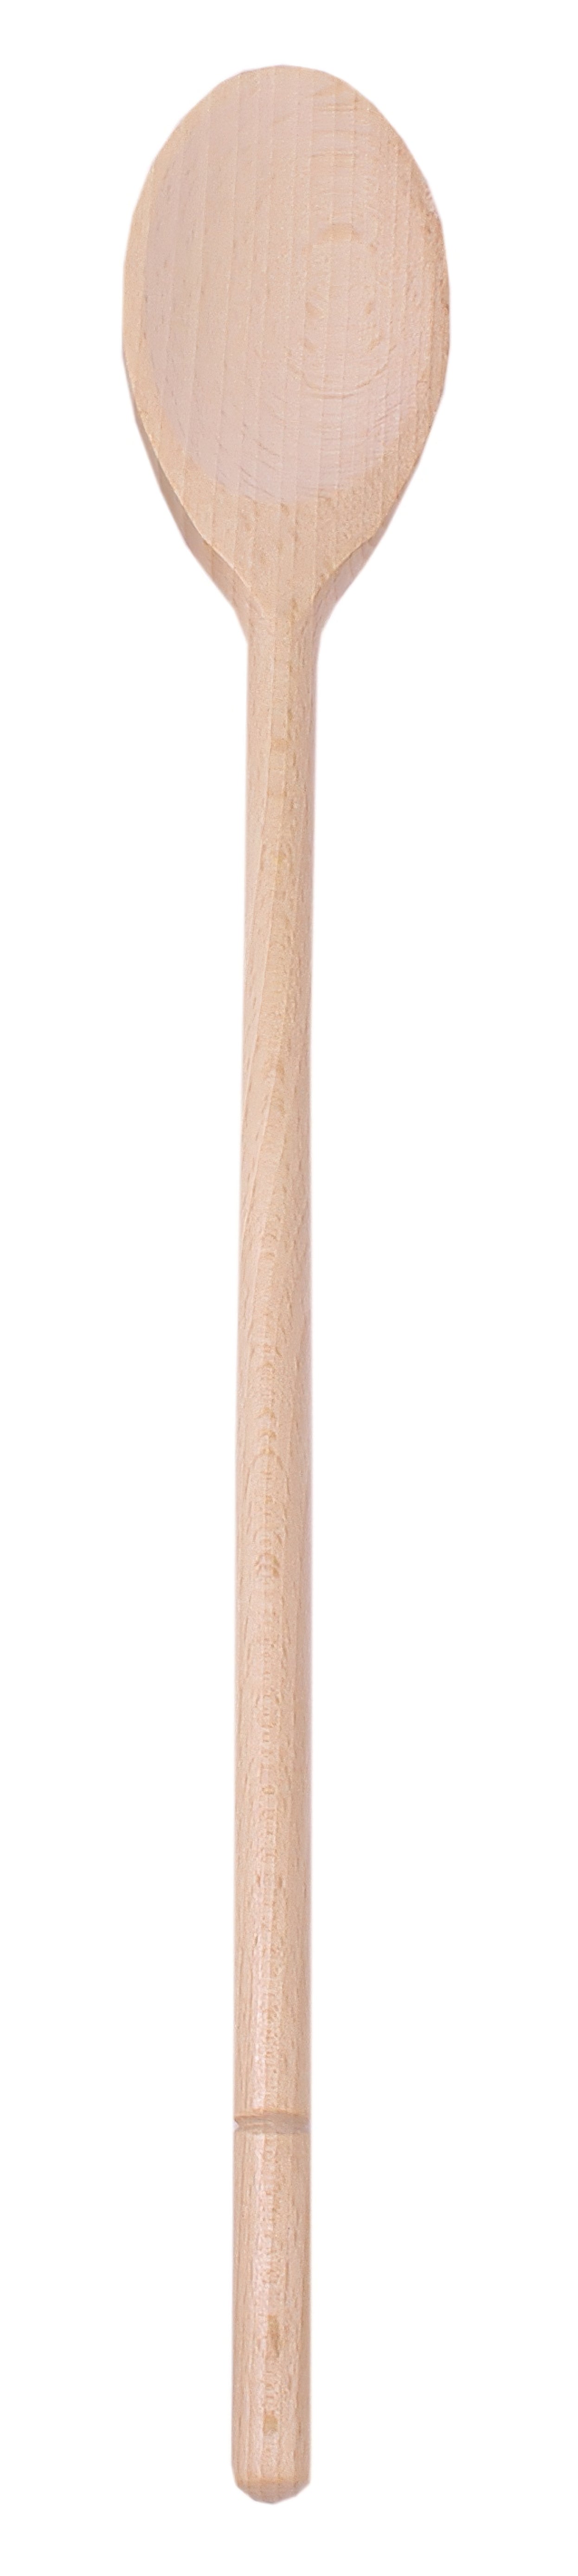 Mondo Wide Mouth Wooden Spoon